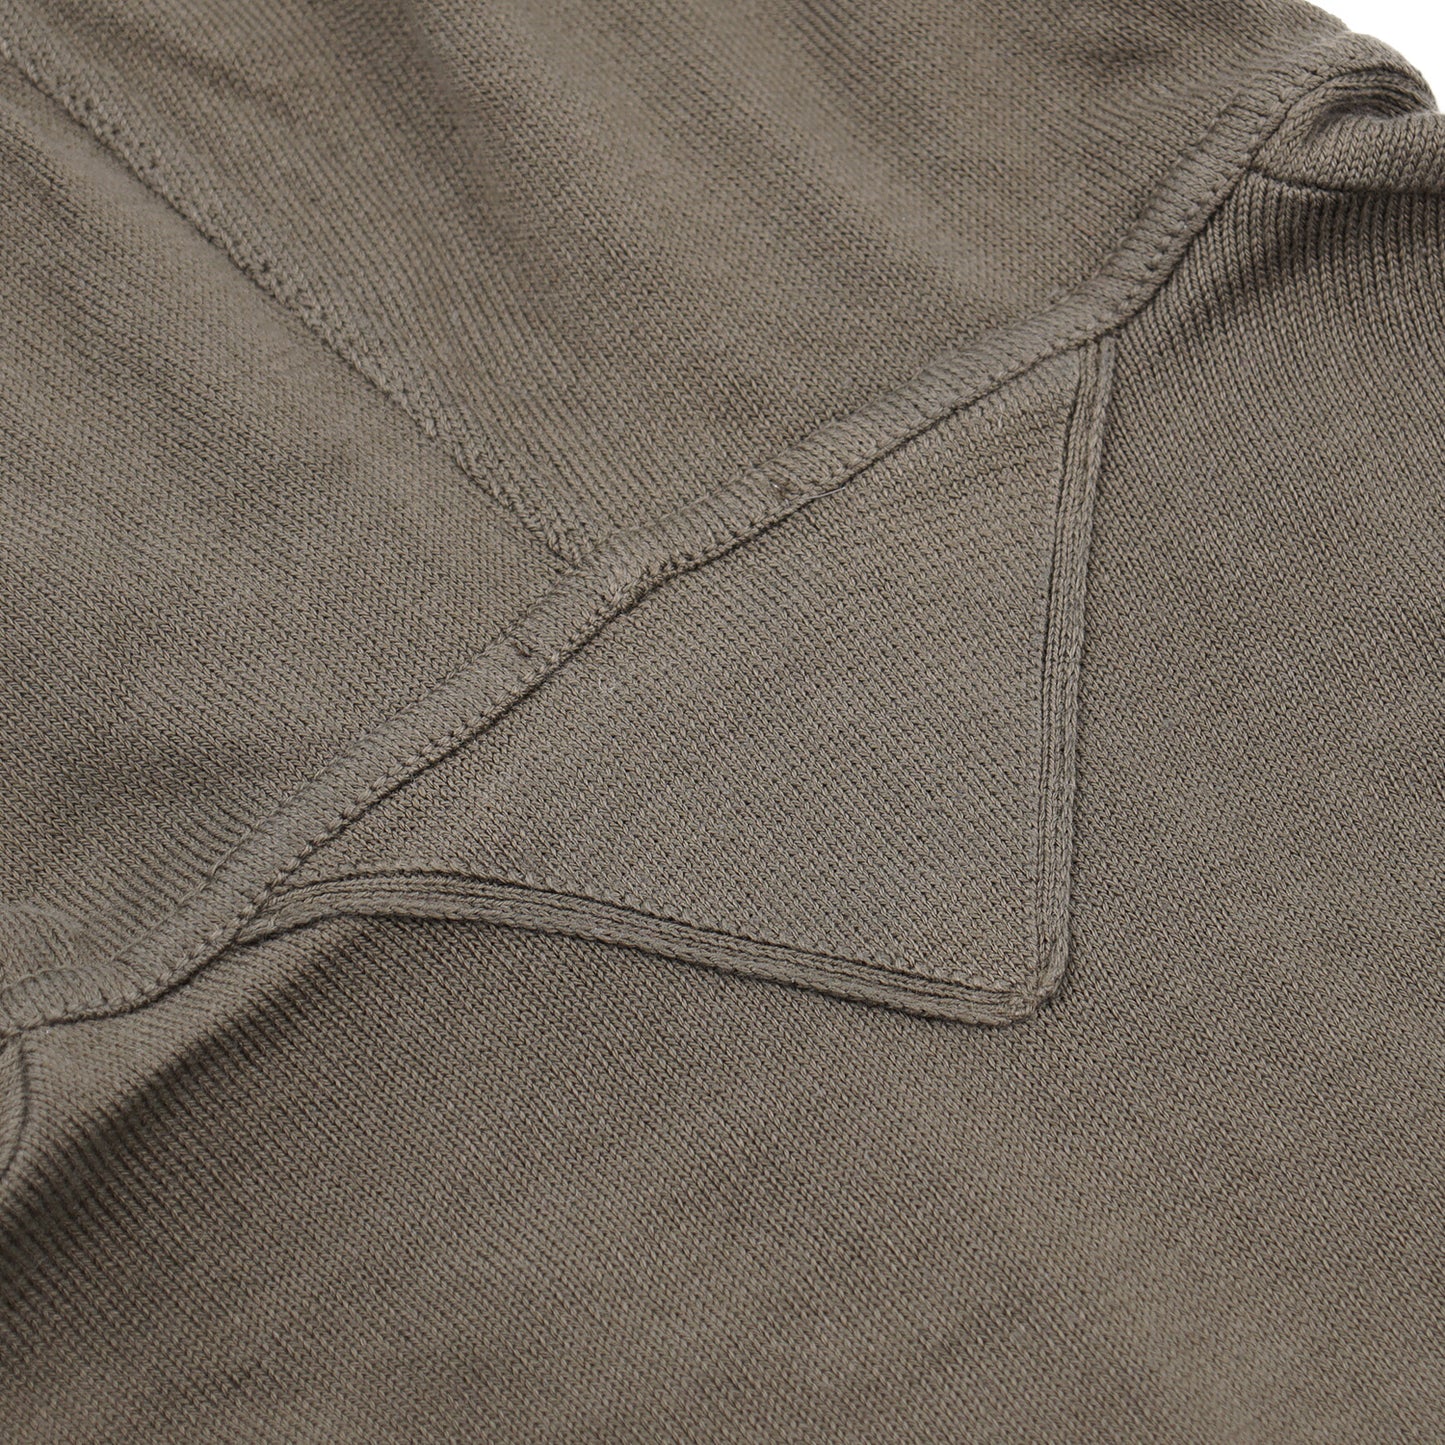 Cruciani Full-Zip Hooded Sweater - Top Shelf Apparel